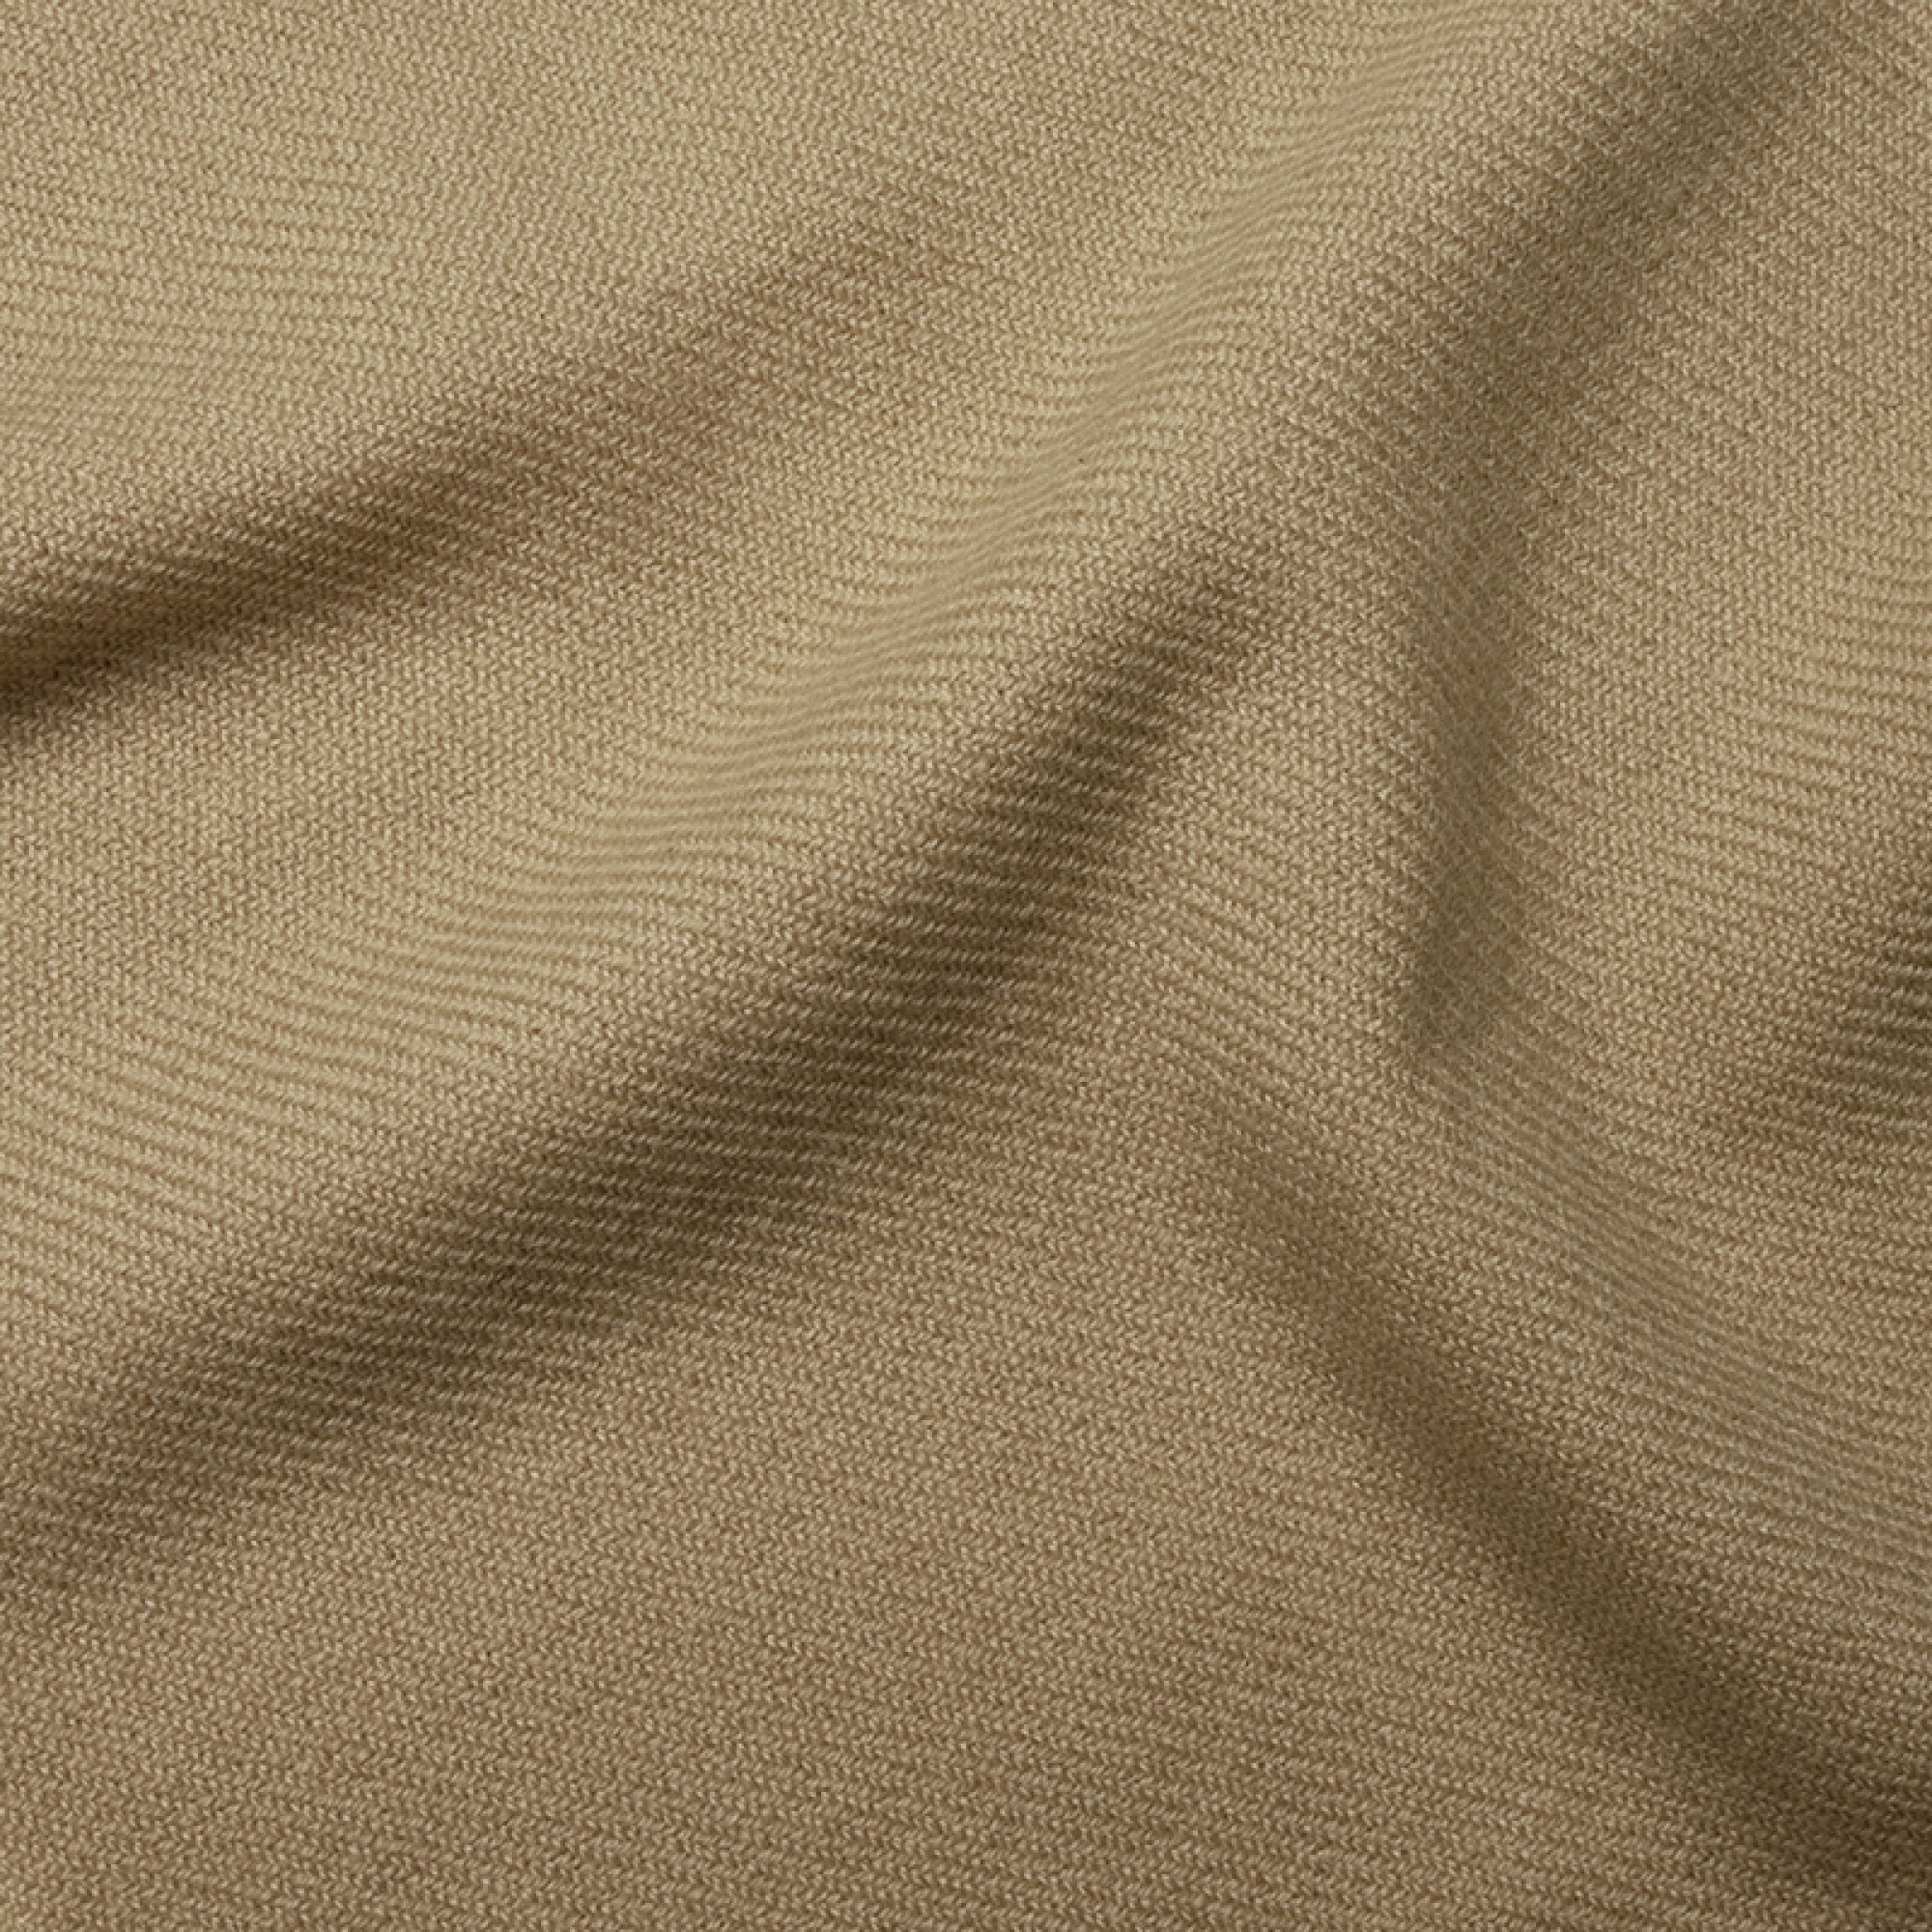 Cachemire pull femme toodoo plain l 220 x 220 beige 220x220cm